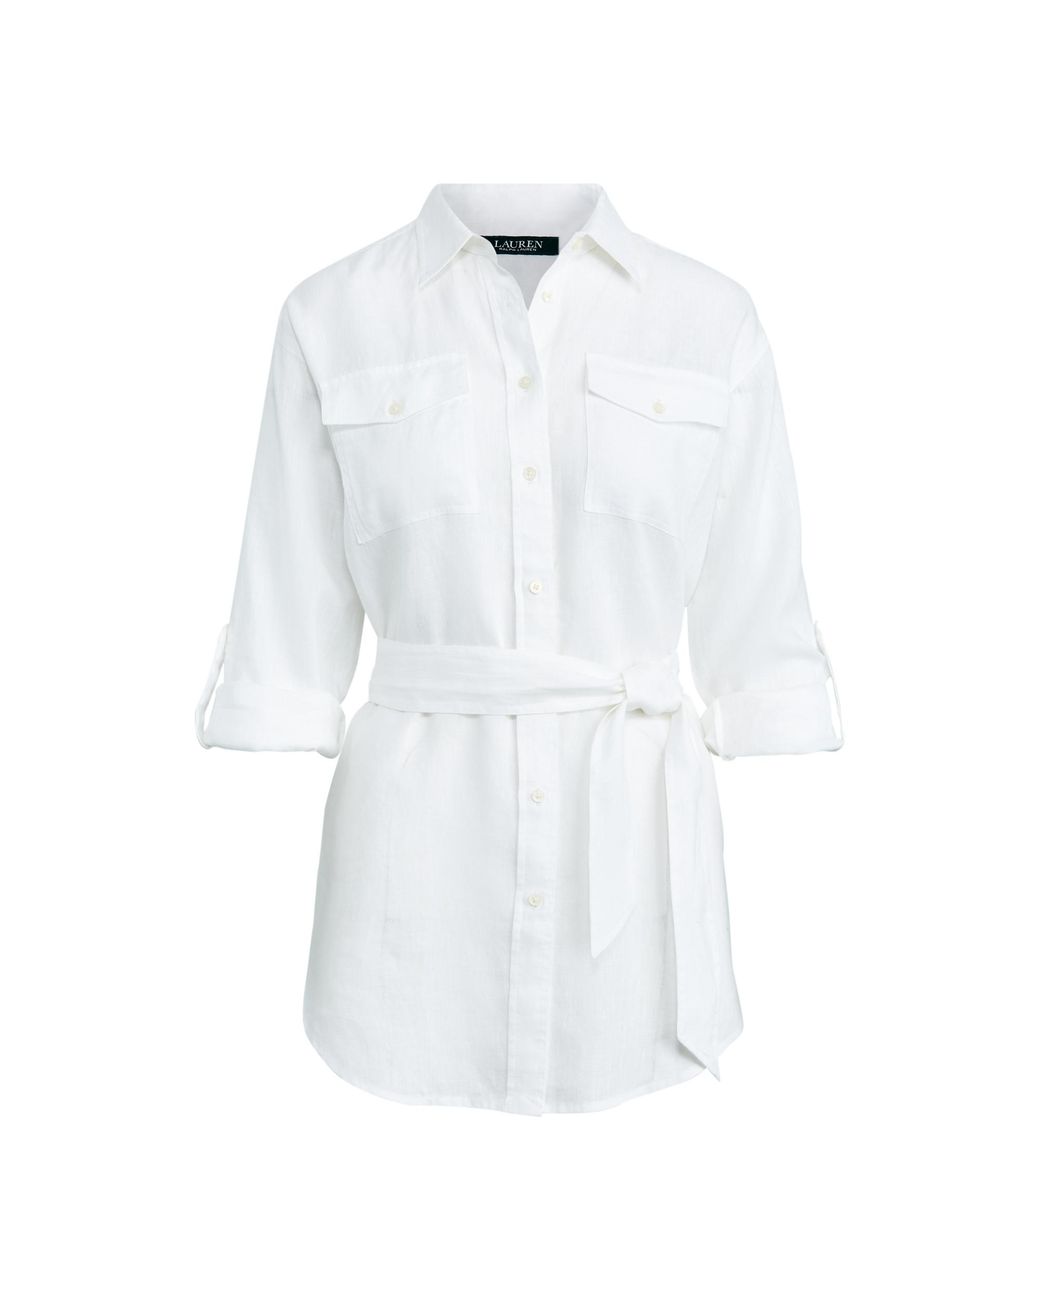 Ralph Lauren Belted Linen Shirt in White - Lyst